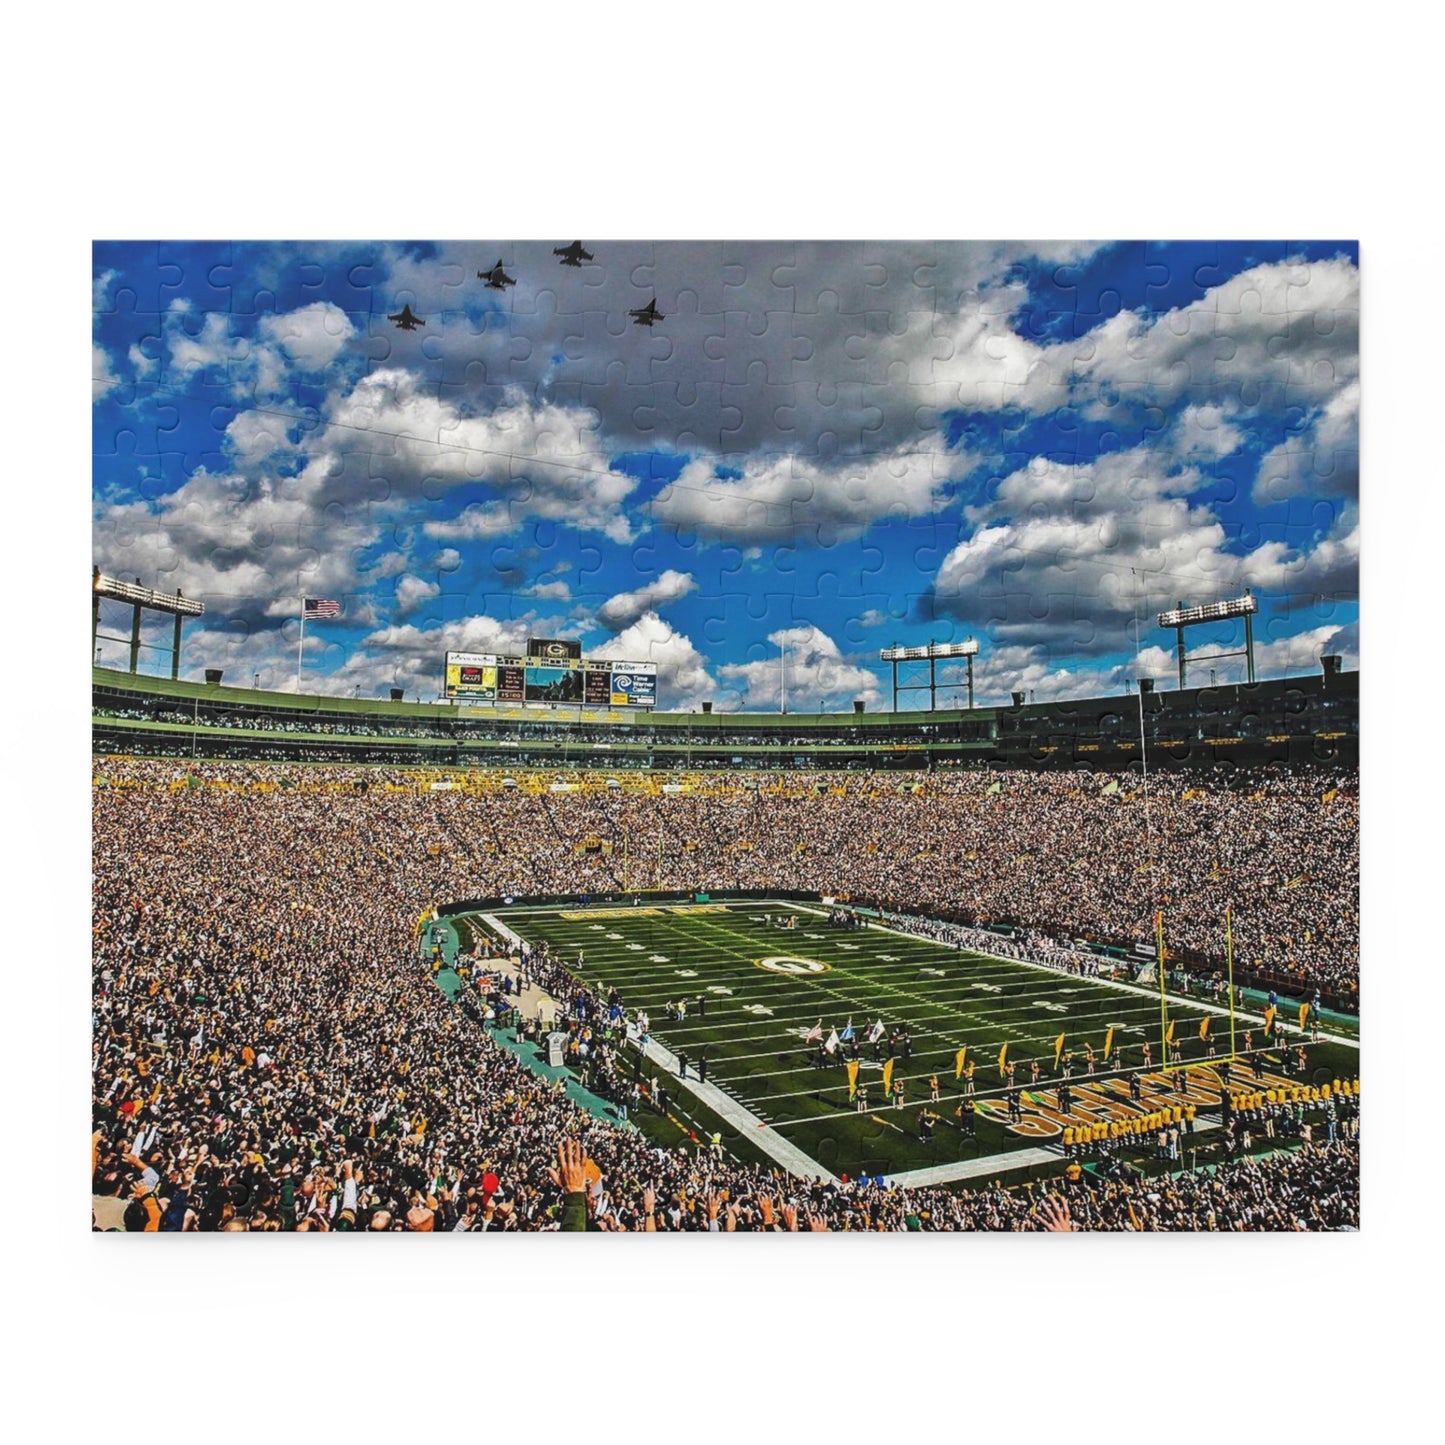 Lambeau Field Puzzle (252-Piece) Green Bay Packers NFL Stadium football game